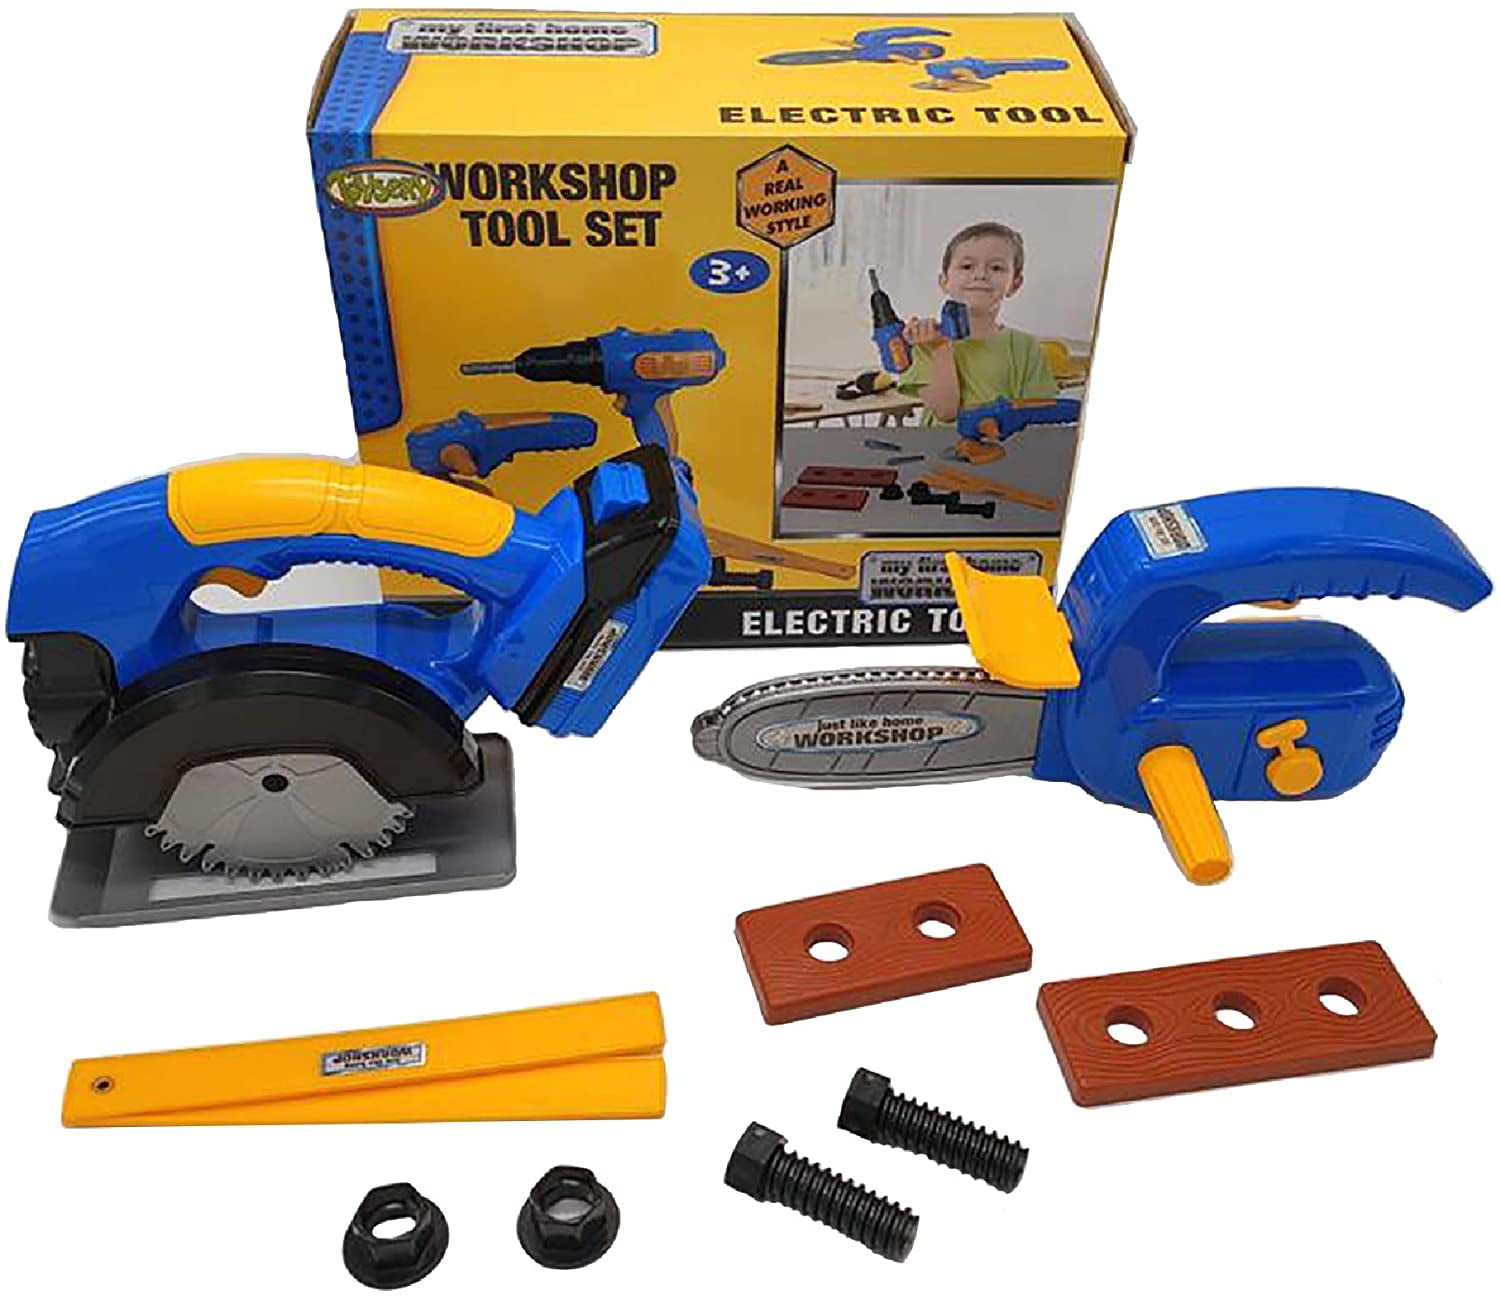 Fun Little Toys Power Tool Workshop Play Construction Tool Set 